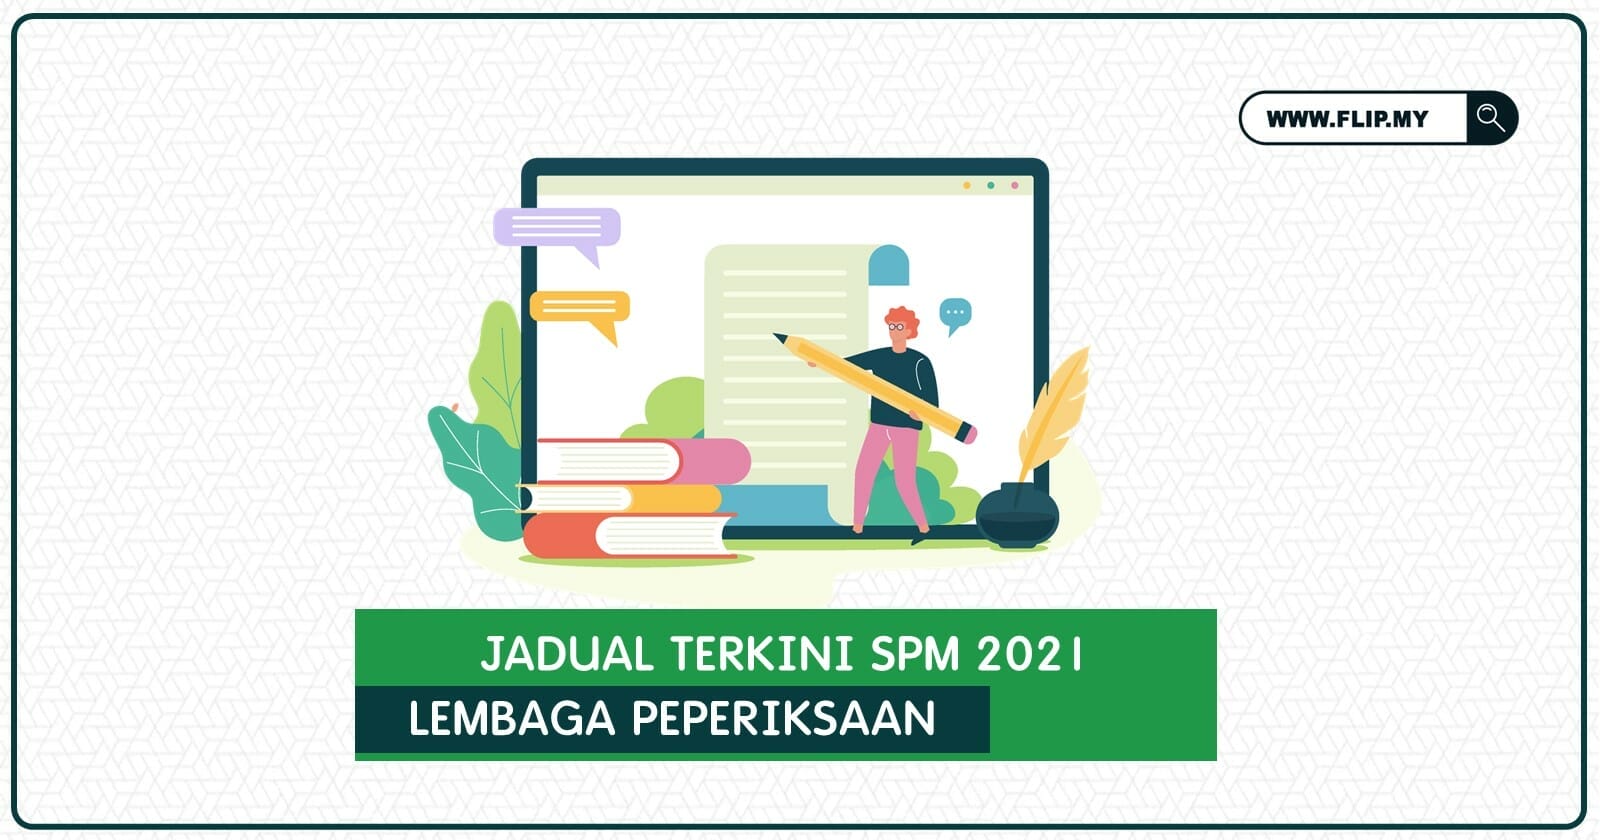 Jadual SPM 2021 Terkini PDF  Lembaga Peperiksaan Malaysia  FLIP.MY